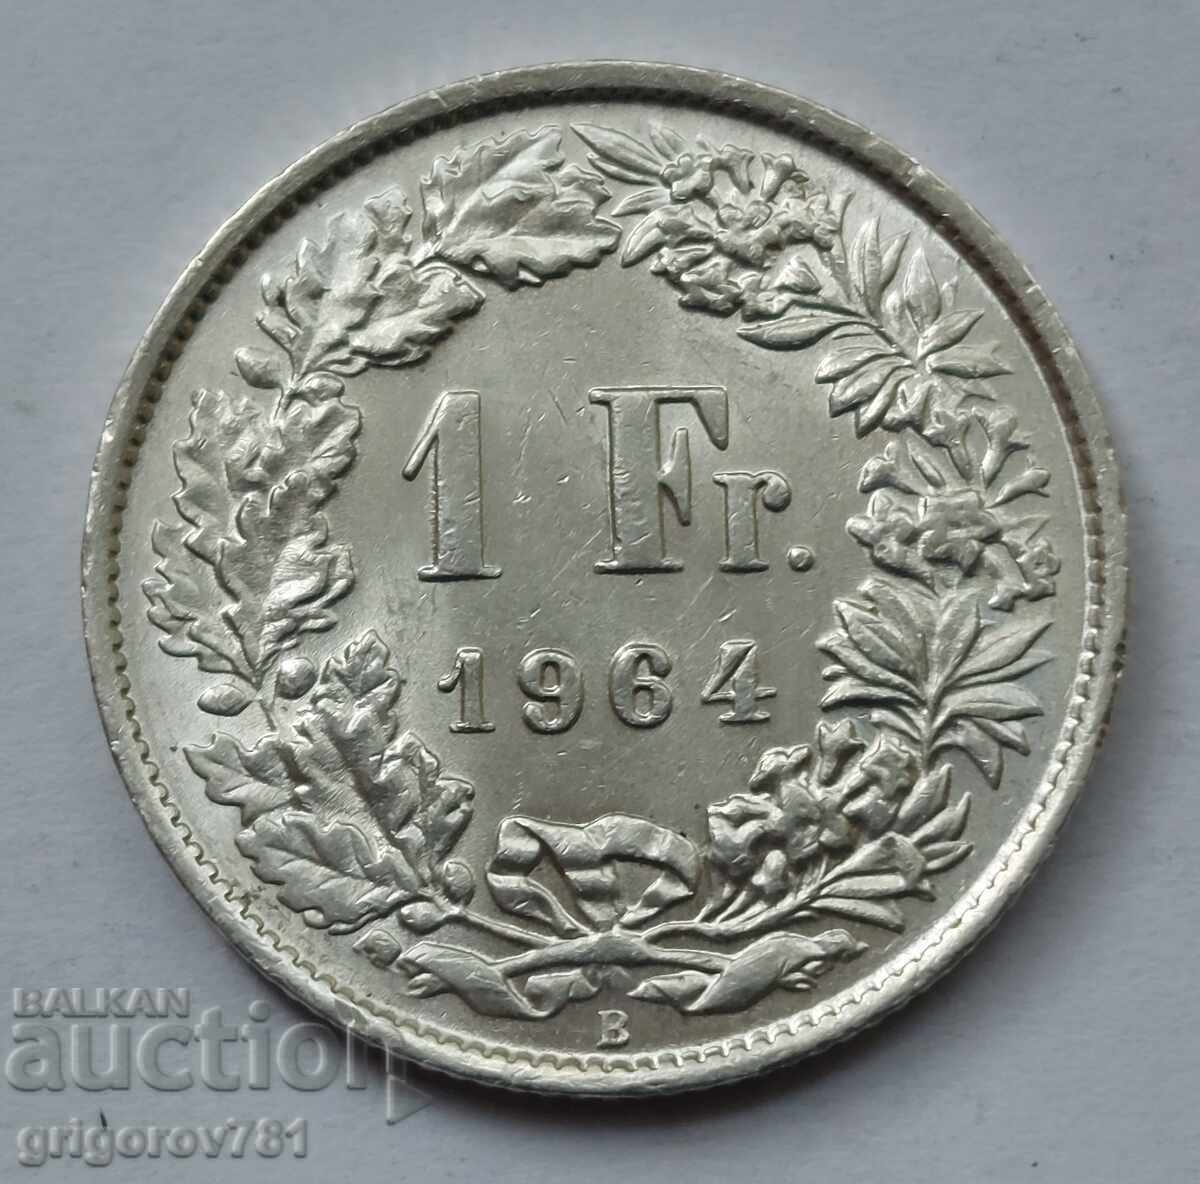 1 Franc Silver Switzerland 1964 B - Silver Coin #2